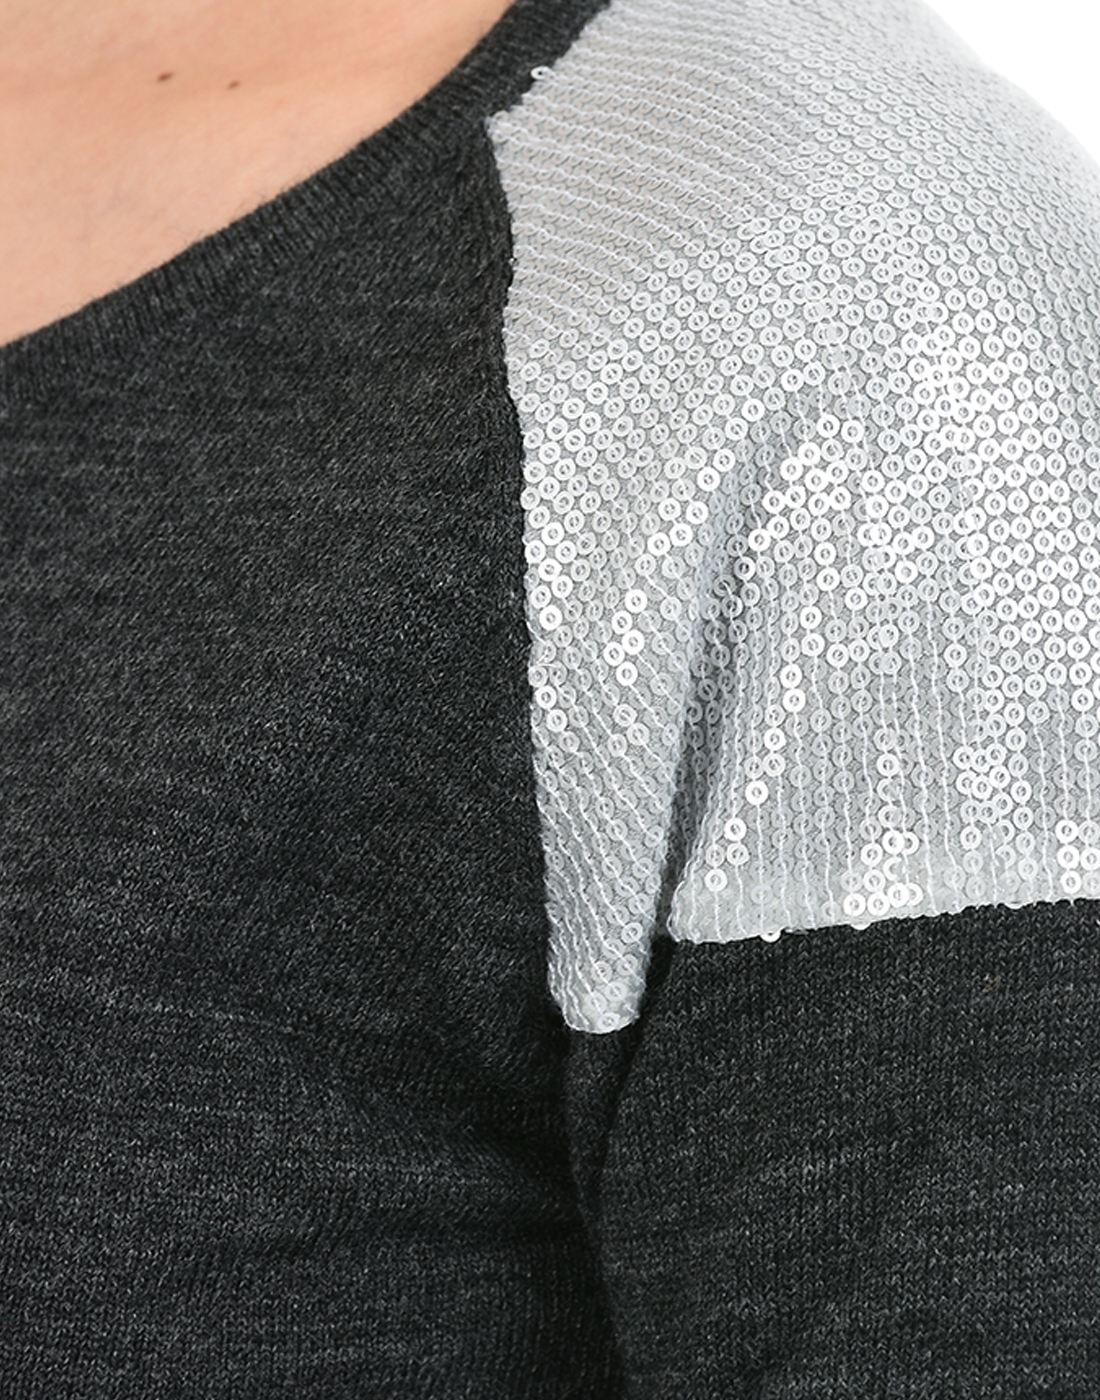 Species Women Grey Embellished Sweater